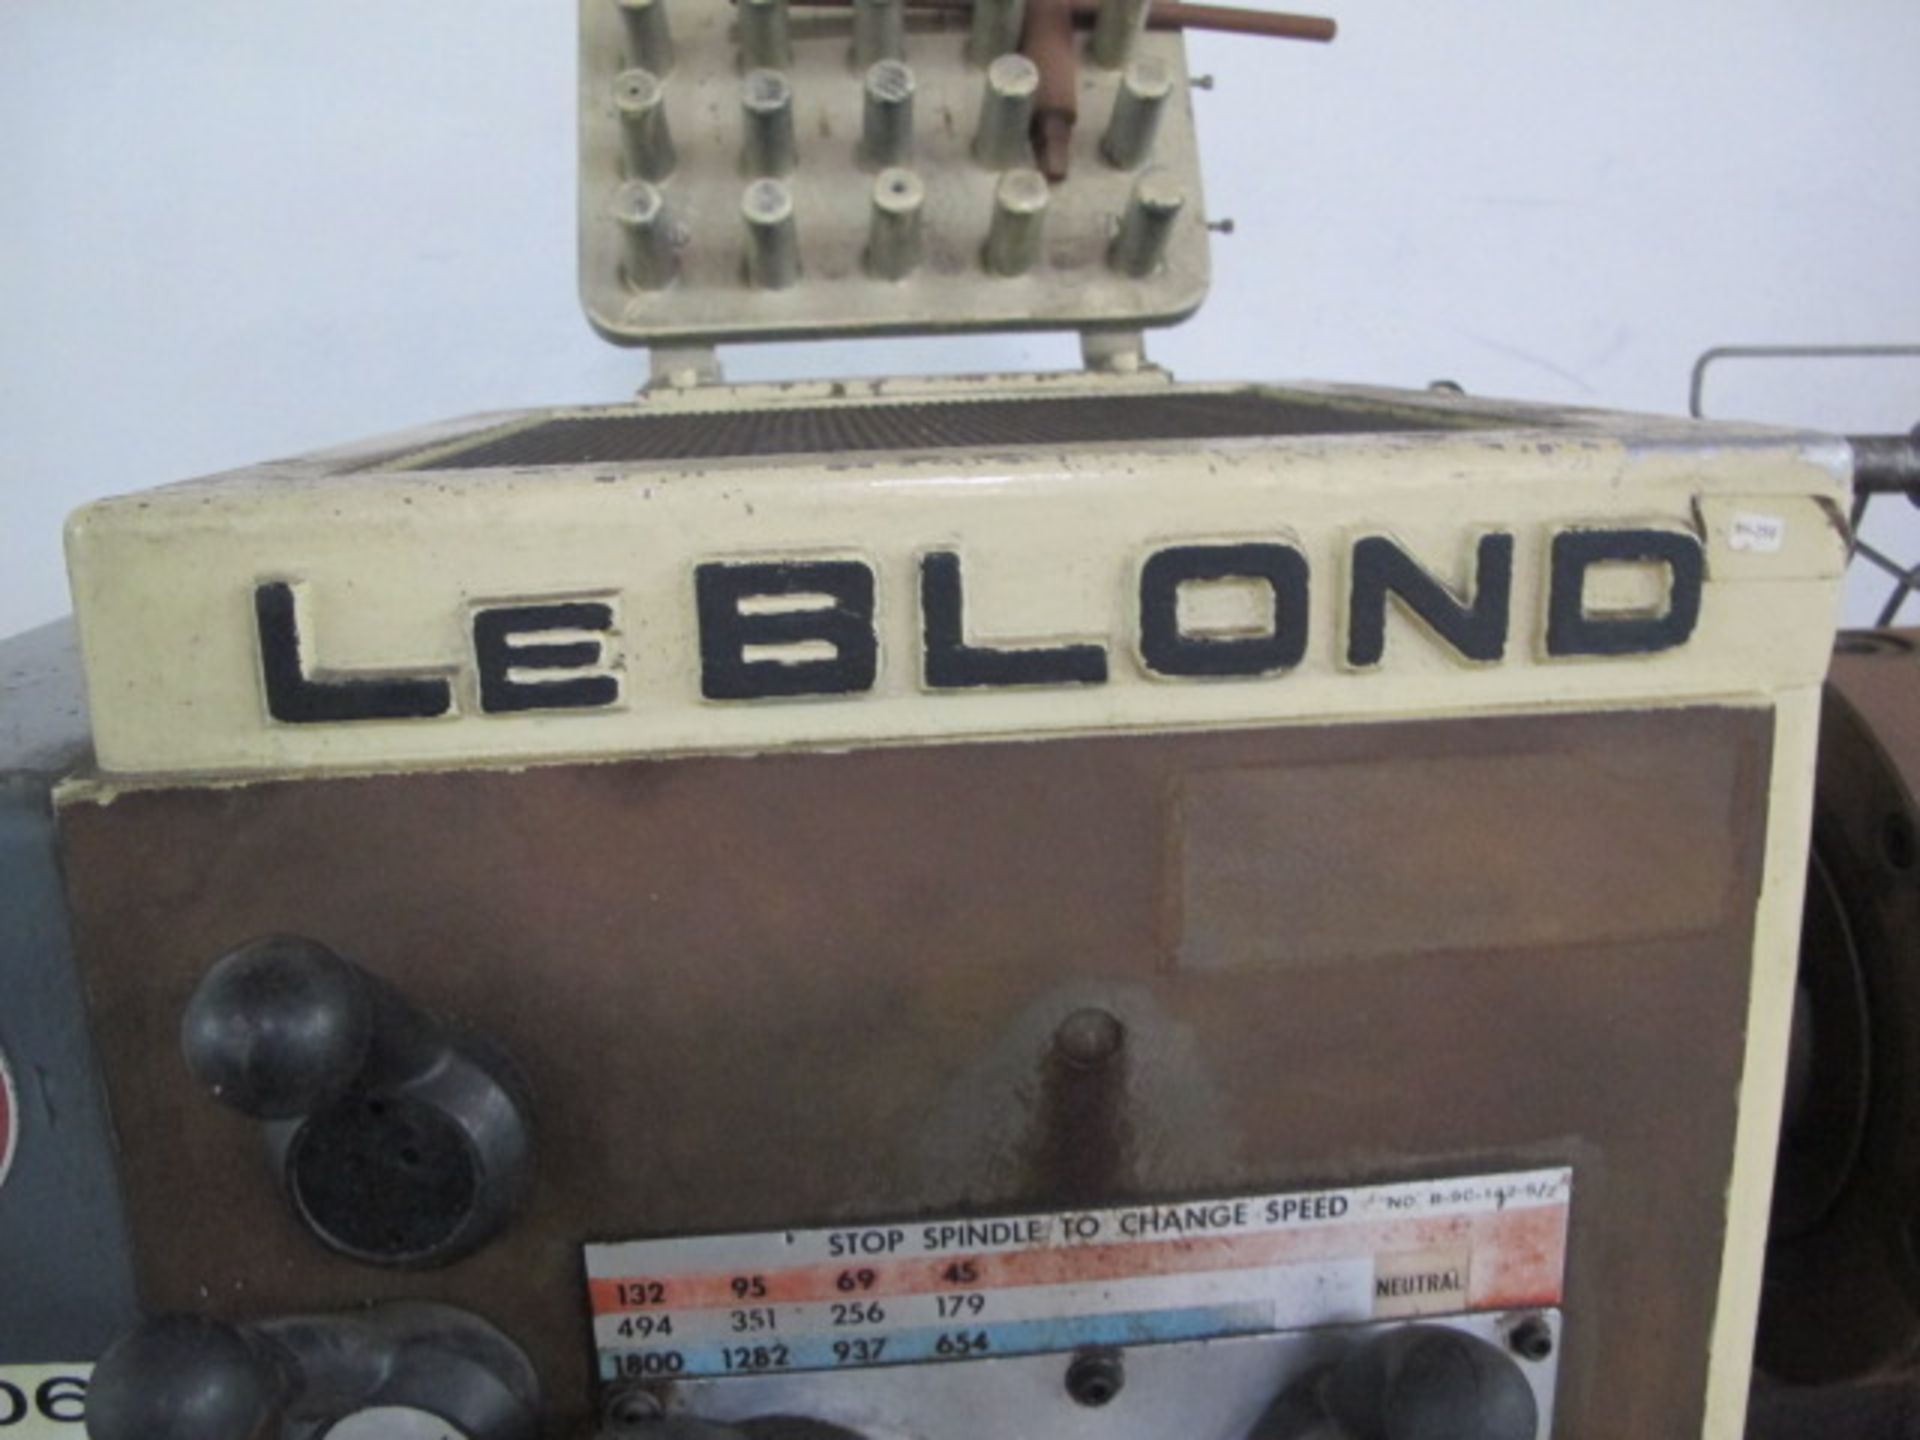 LeBlond Regal 15”x 56” Geared Head Lathe s/n 4B651 w/ 45-1800 RPM, Inch Threading, Tailstock, KDK - Image 5 of 7